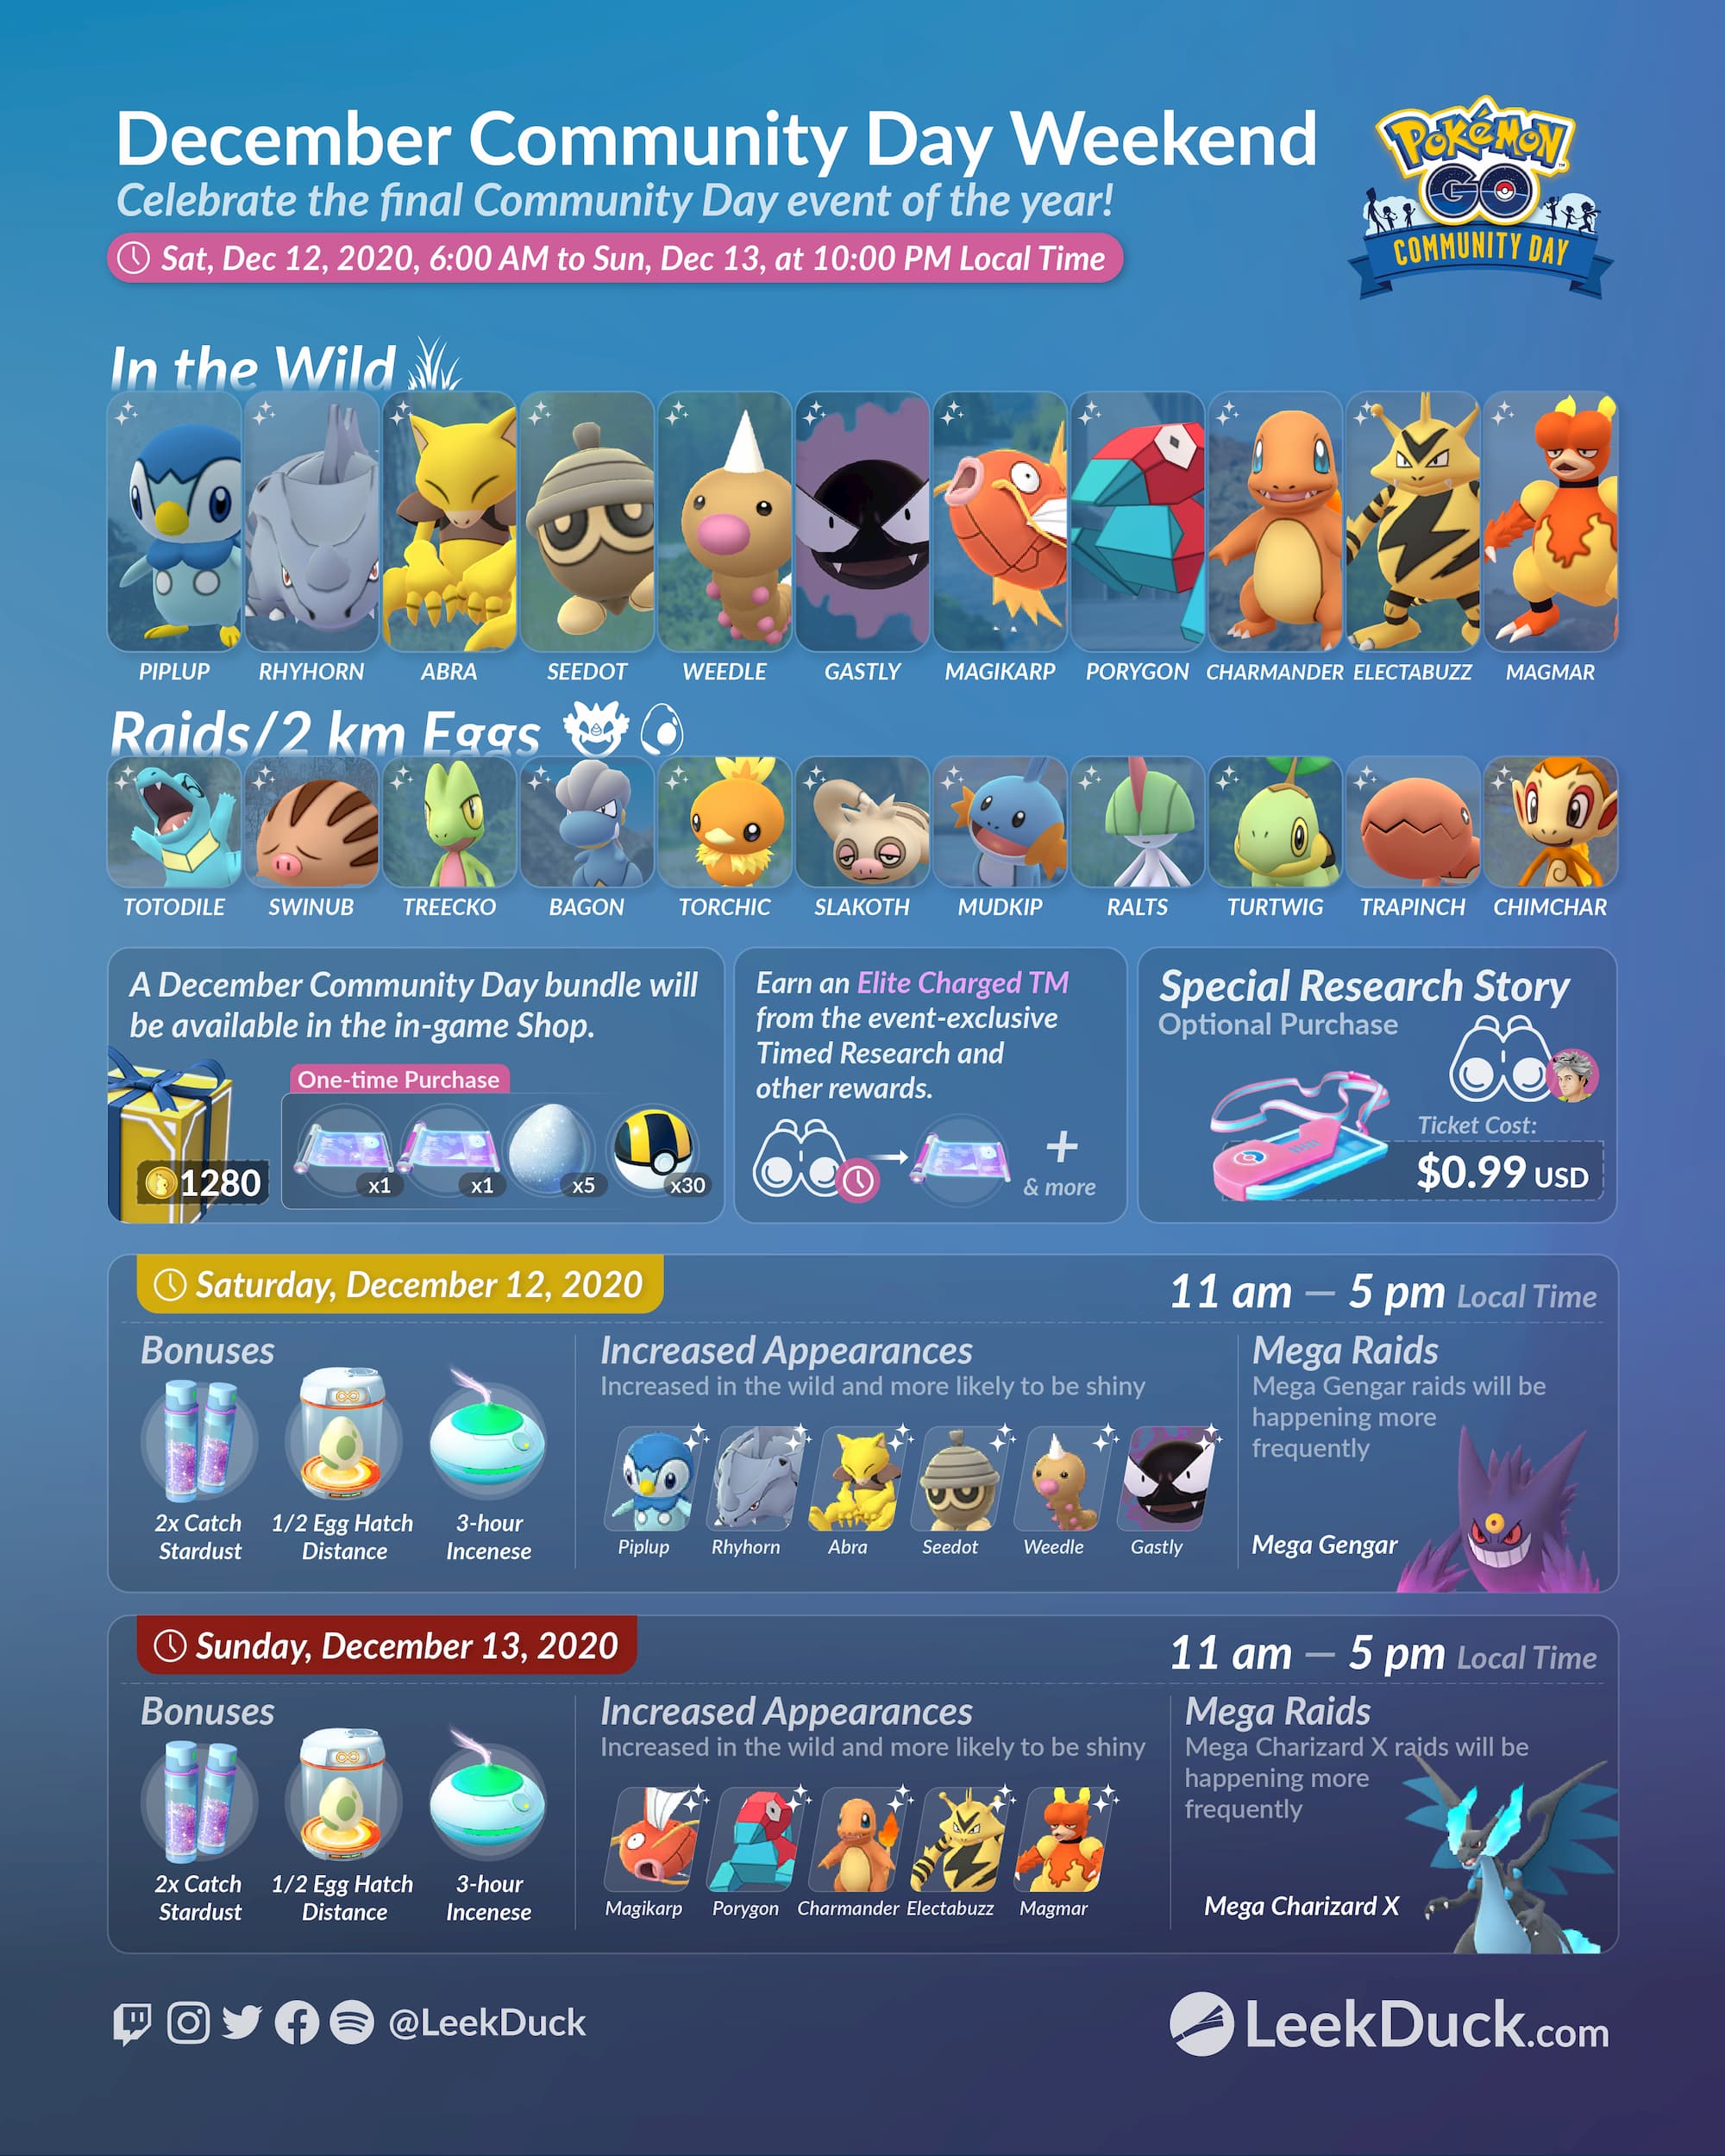 Pokémon Go Abra Community Day guide: best movesets and start times - Polygon